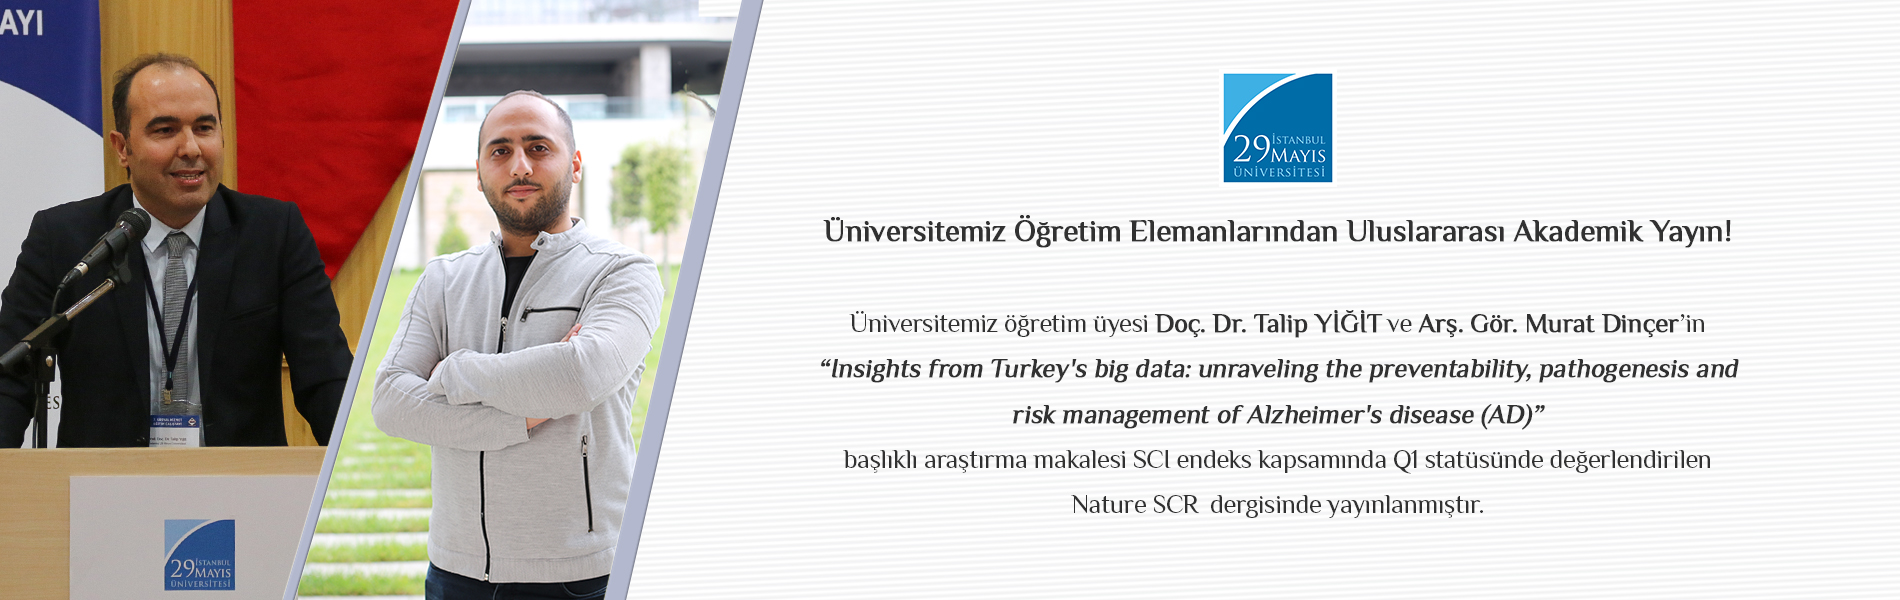 Üniversitemiz Öğretim Üyesi Doç. Dr. Talip YİĞİT ve Arş. Gör. Murat Dinçer’in Insights from Turkey's big data: unraveling the preventability, pathogenesis and risk management of Alzheimer's disease